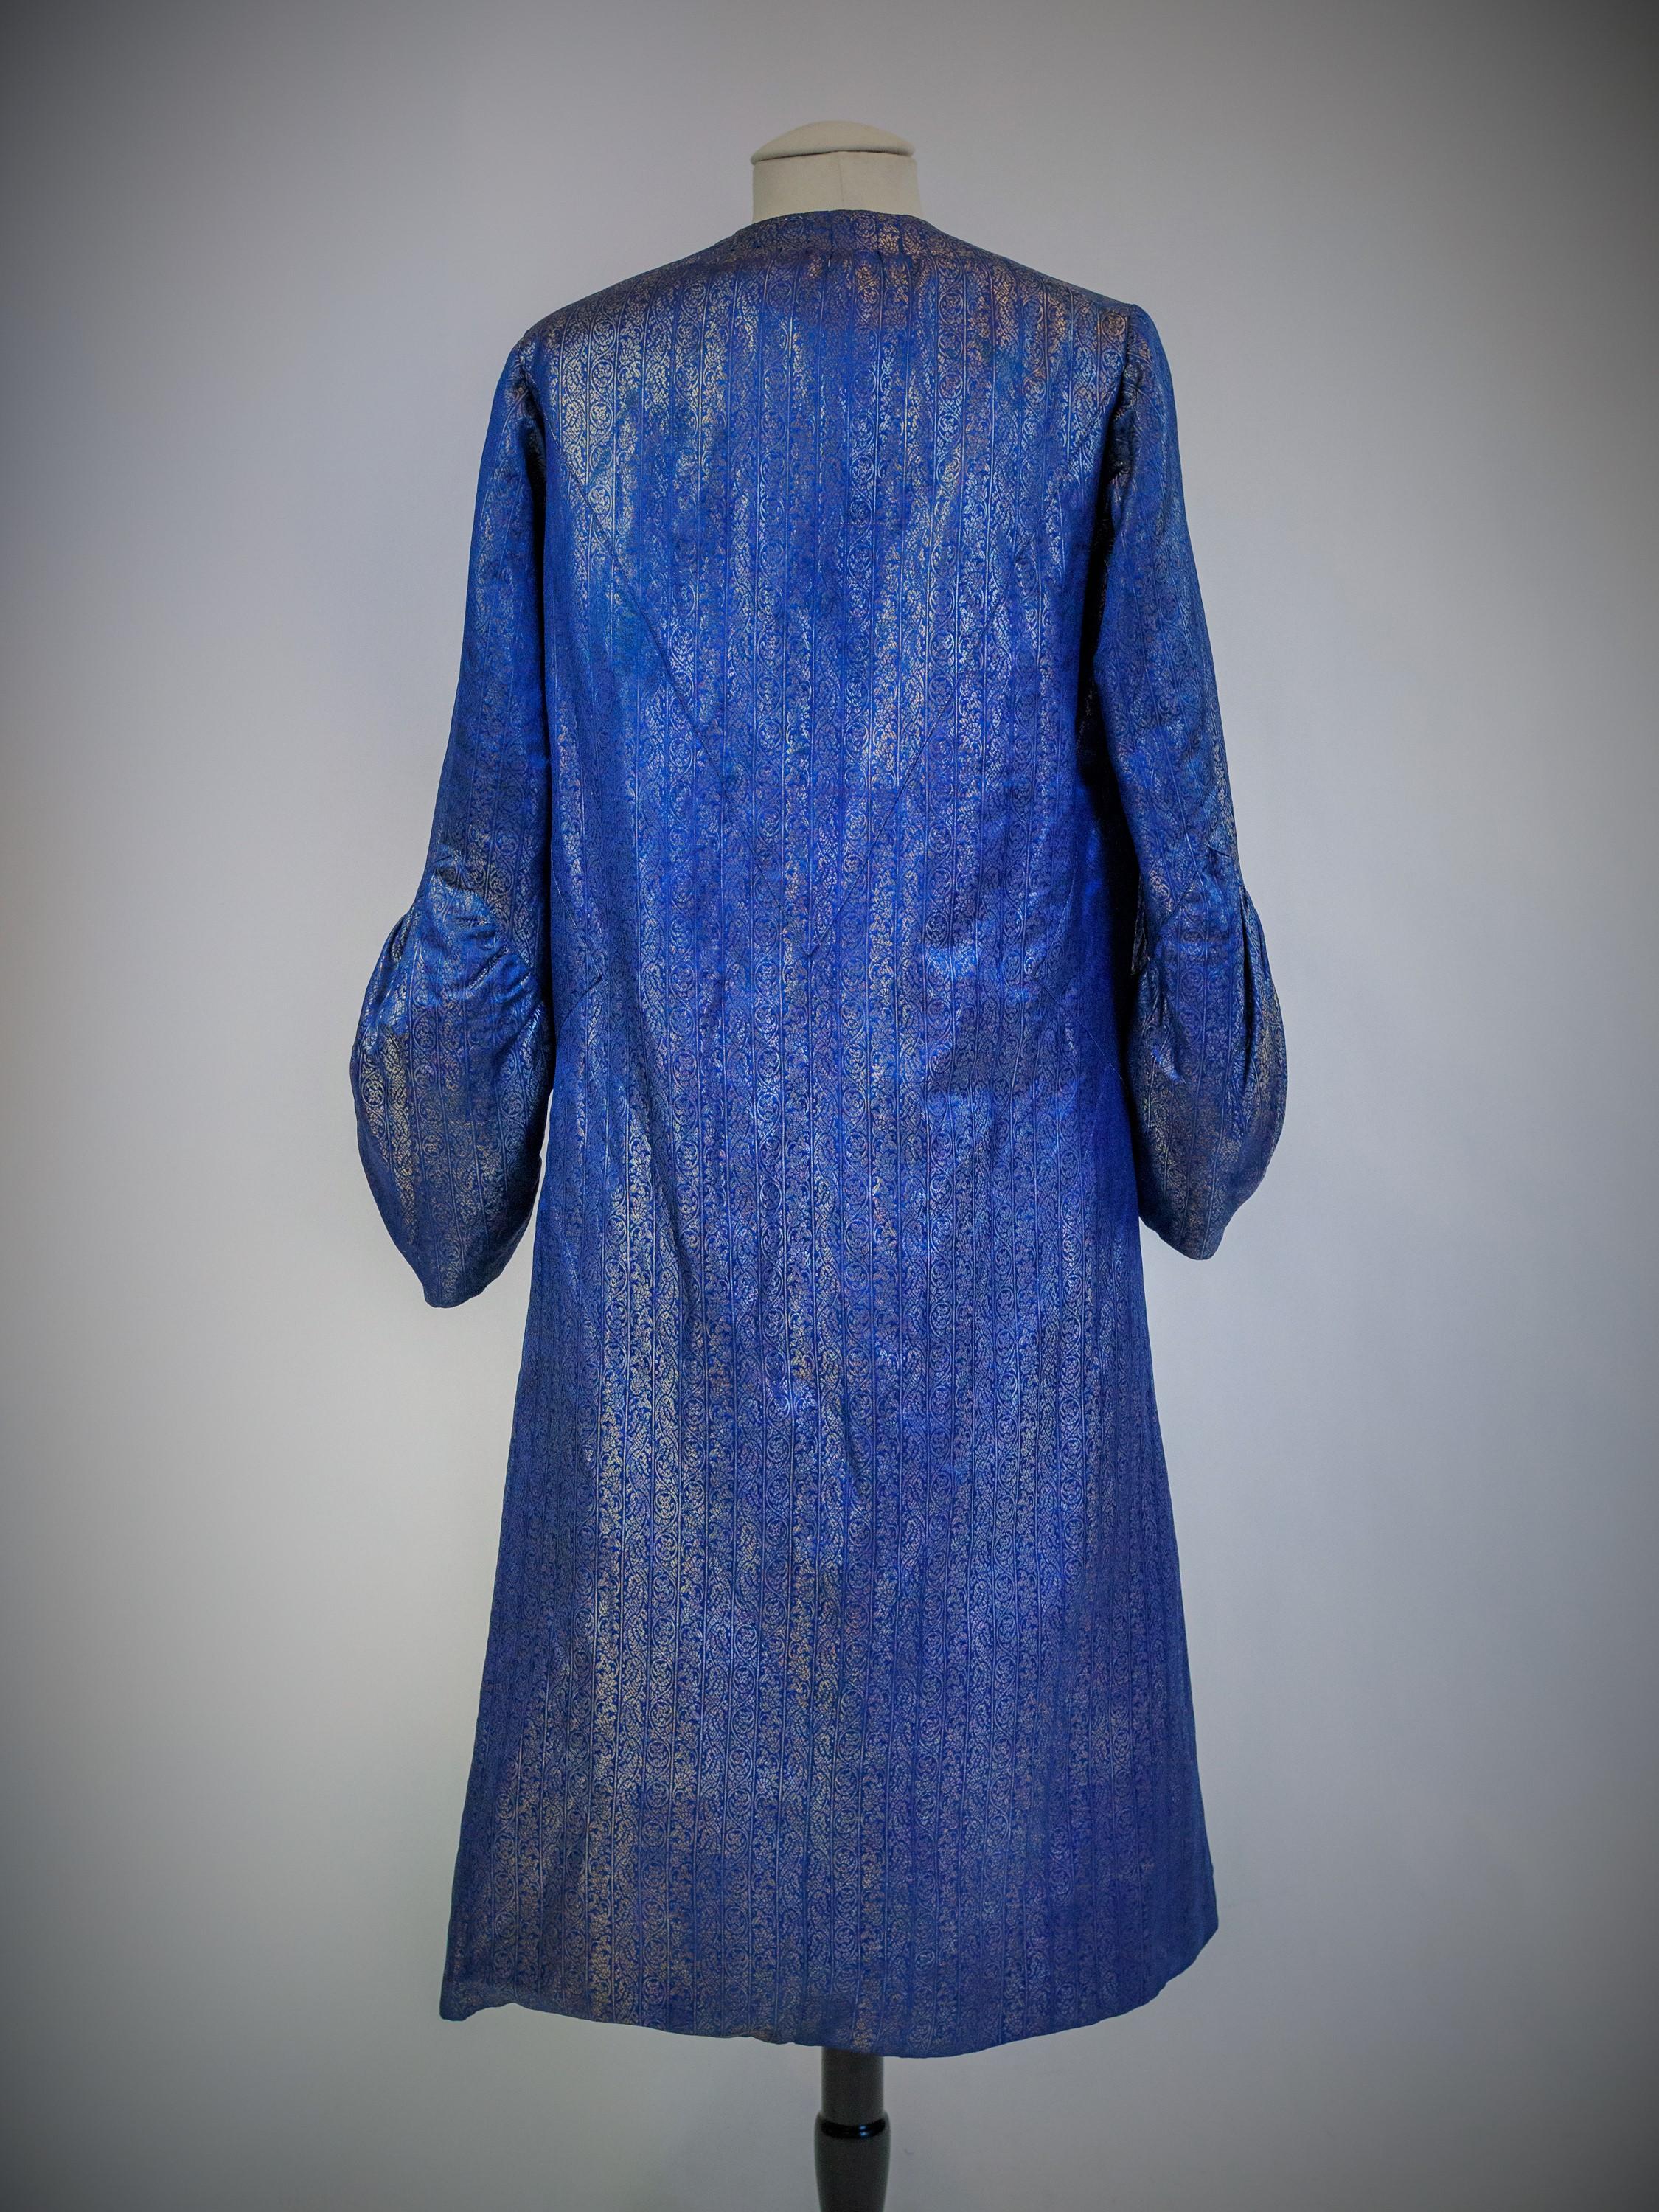 Blue Evening Couture coat in silver lamé by Germaine Lecomte N°03871 Paris Circa 1930 For Sale